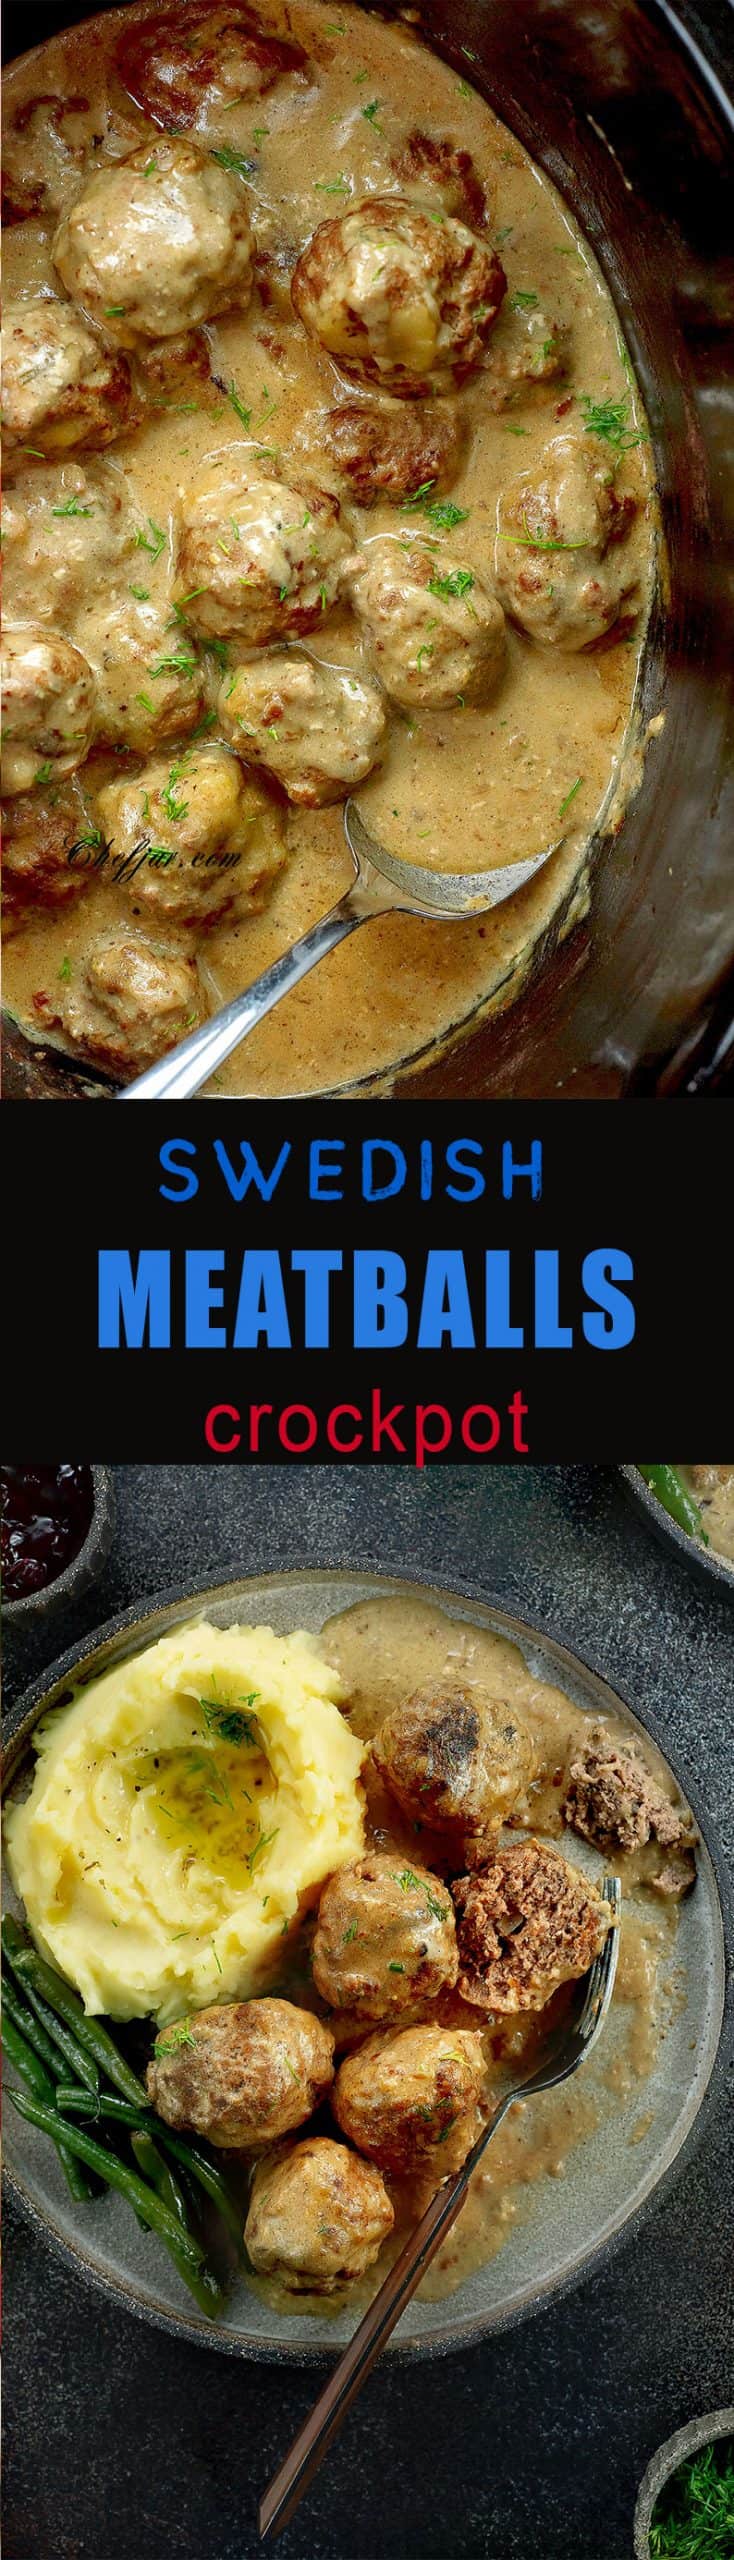 swedish-meatballs-crockpot